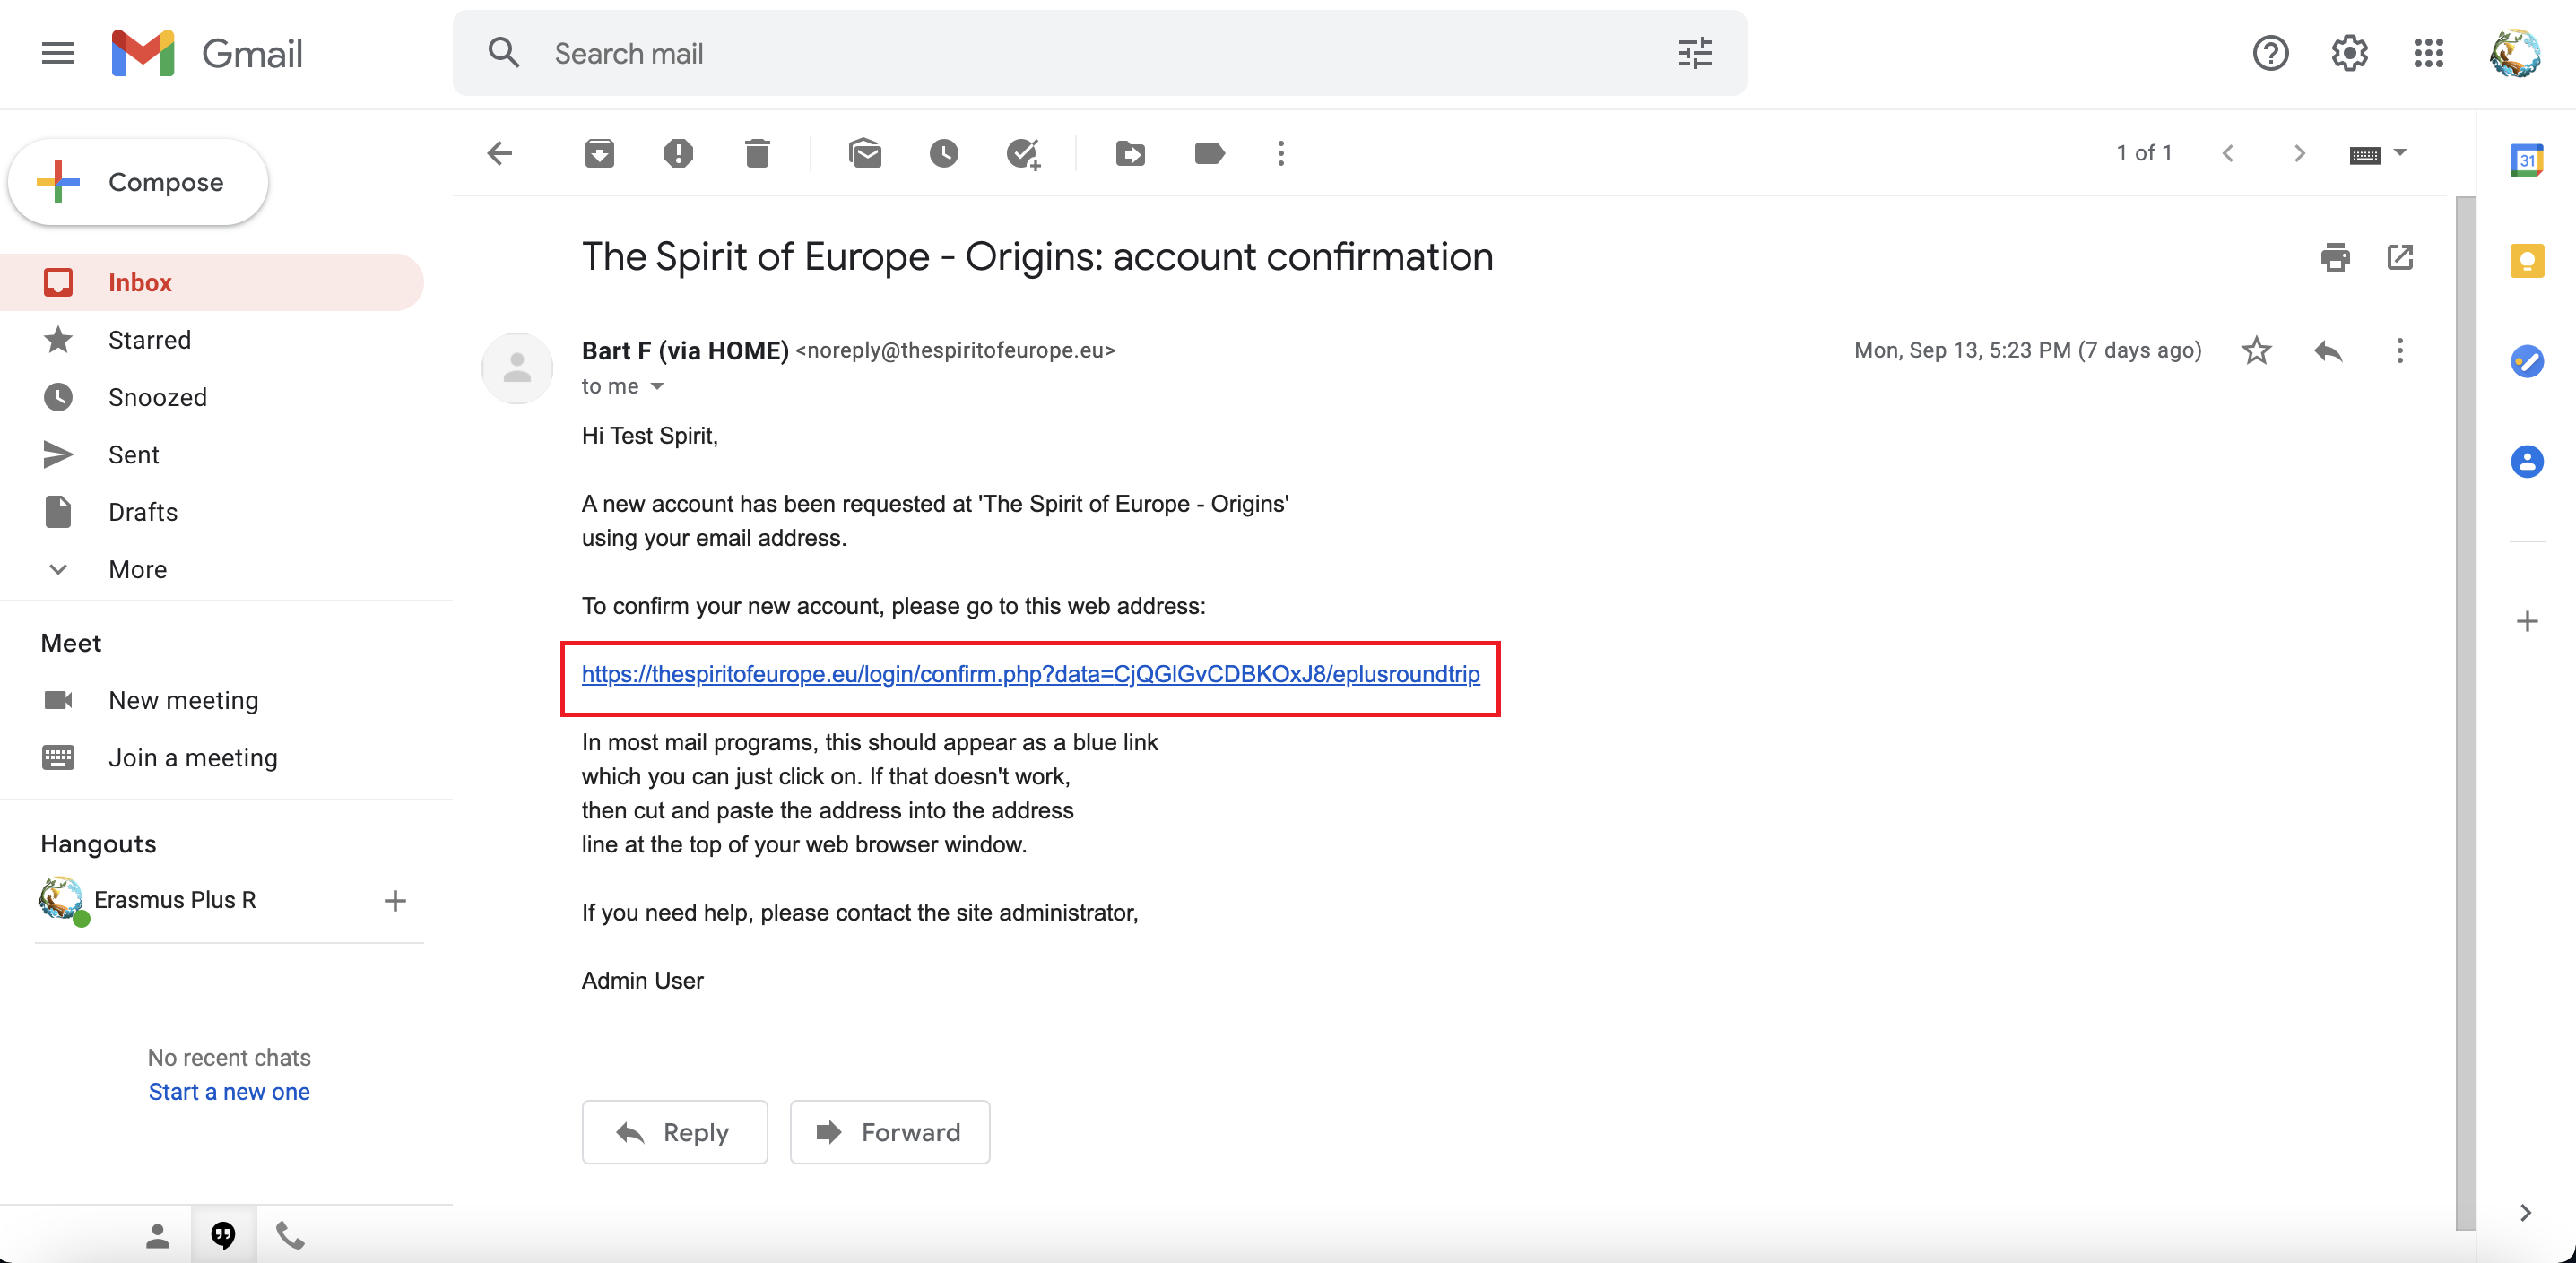 Spirit of Europe - Origins - Website Registration Process + Video Tutorial Guide - Website registration - 6DAD48C